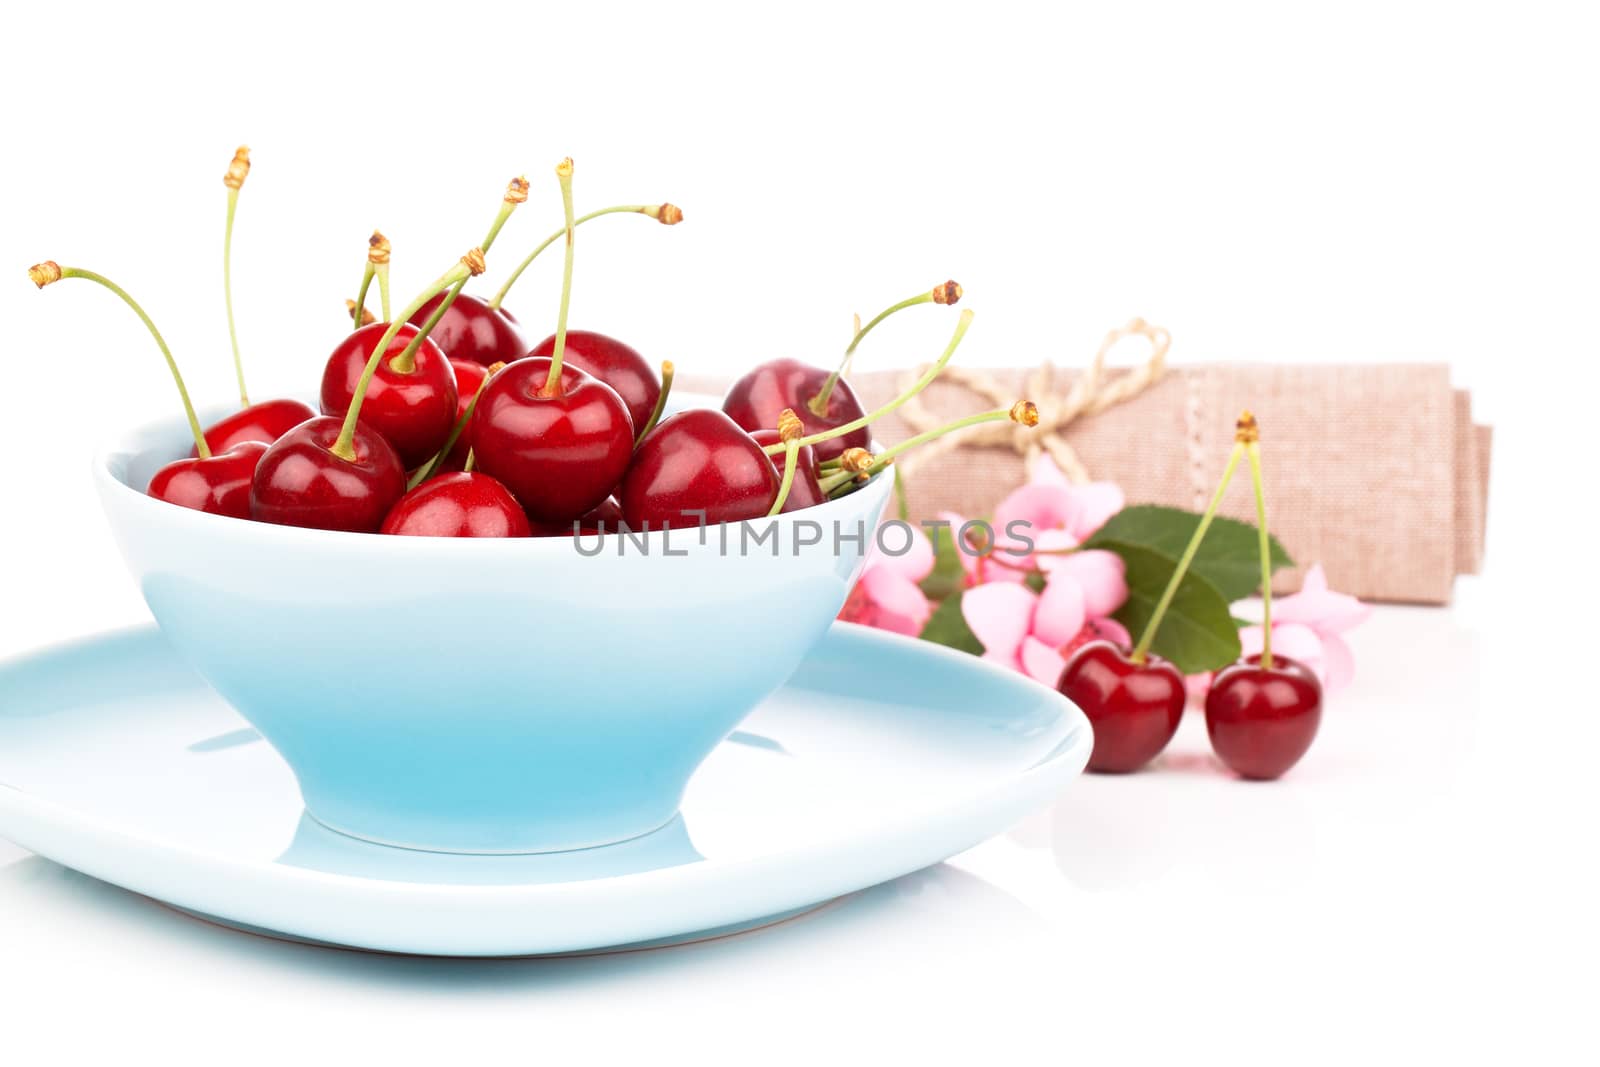 Bowl full of cherries isolated on white background by motorolka